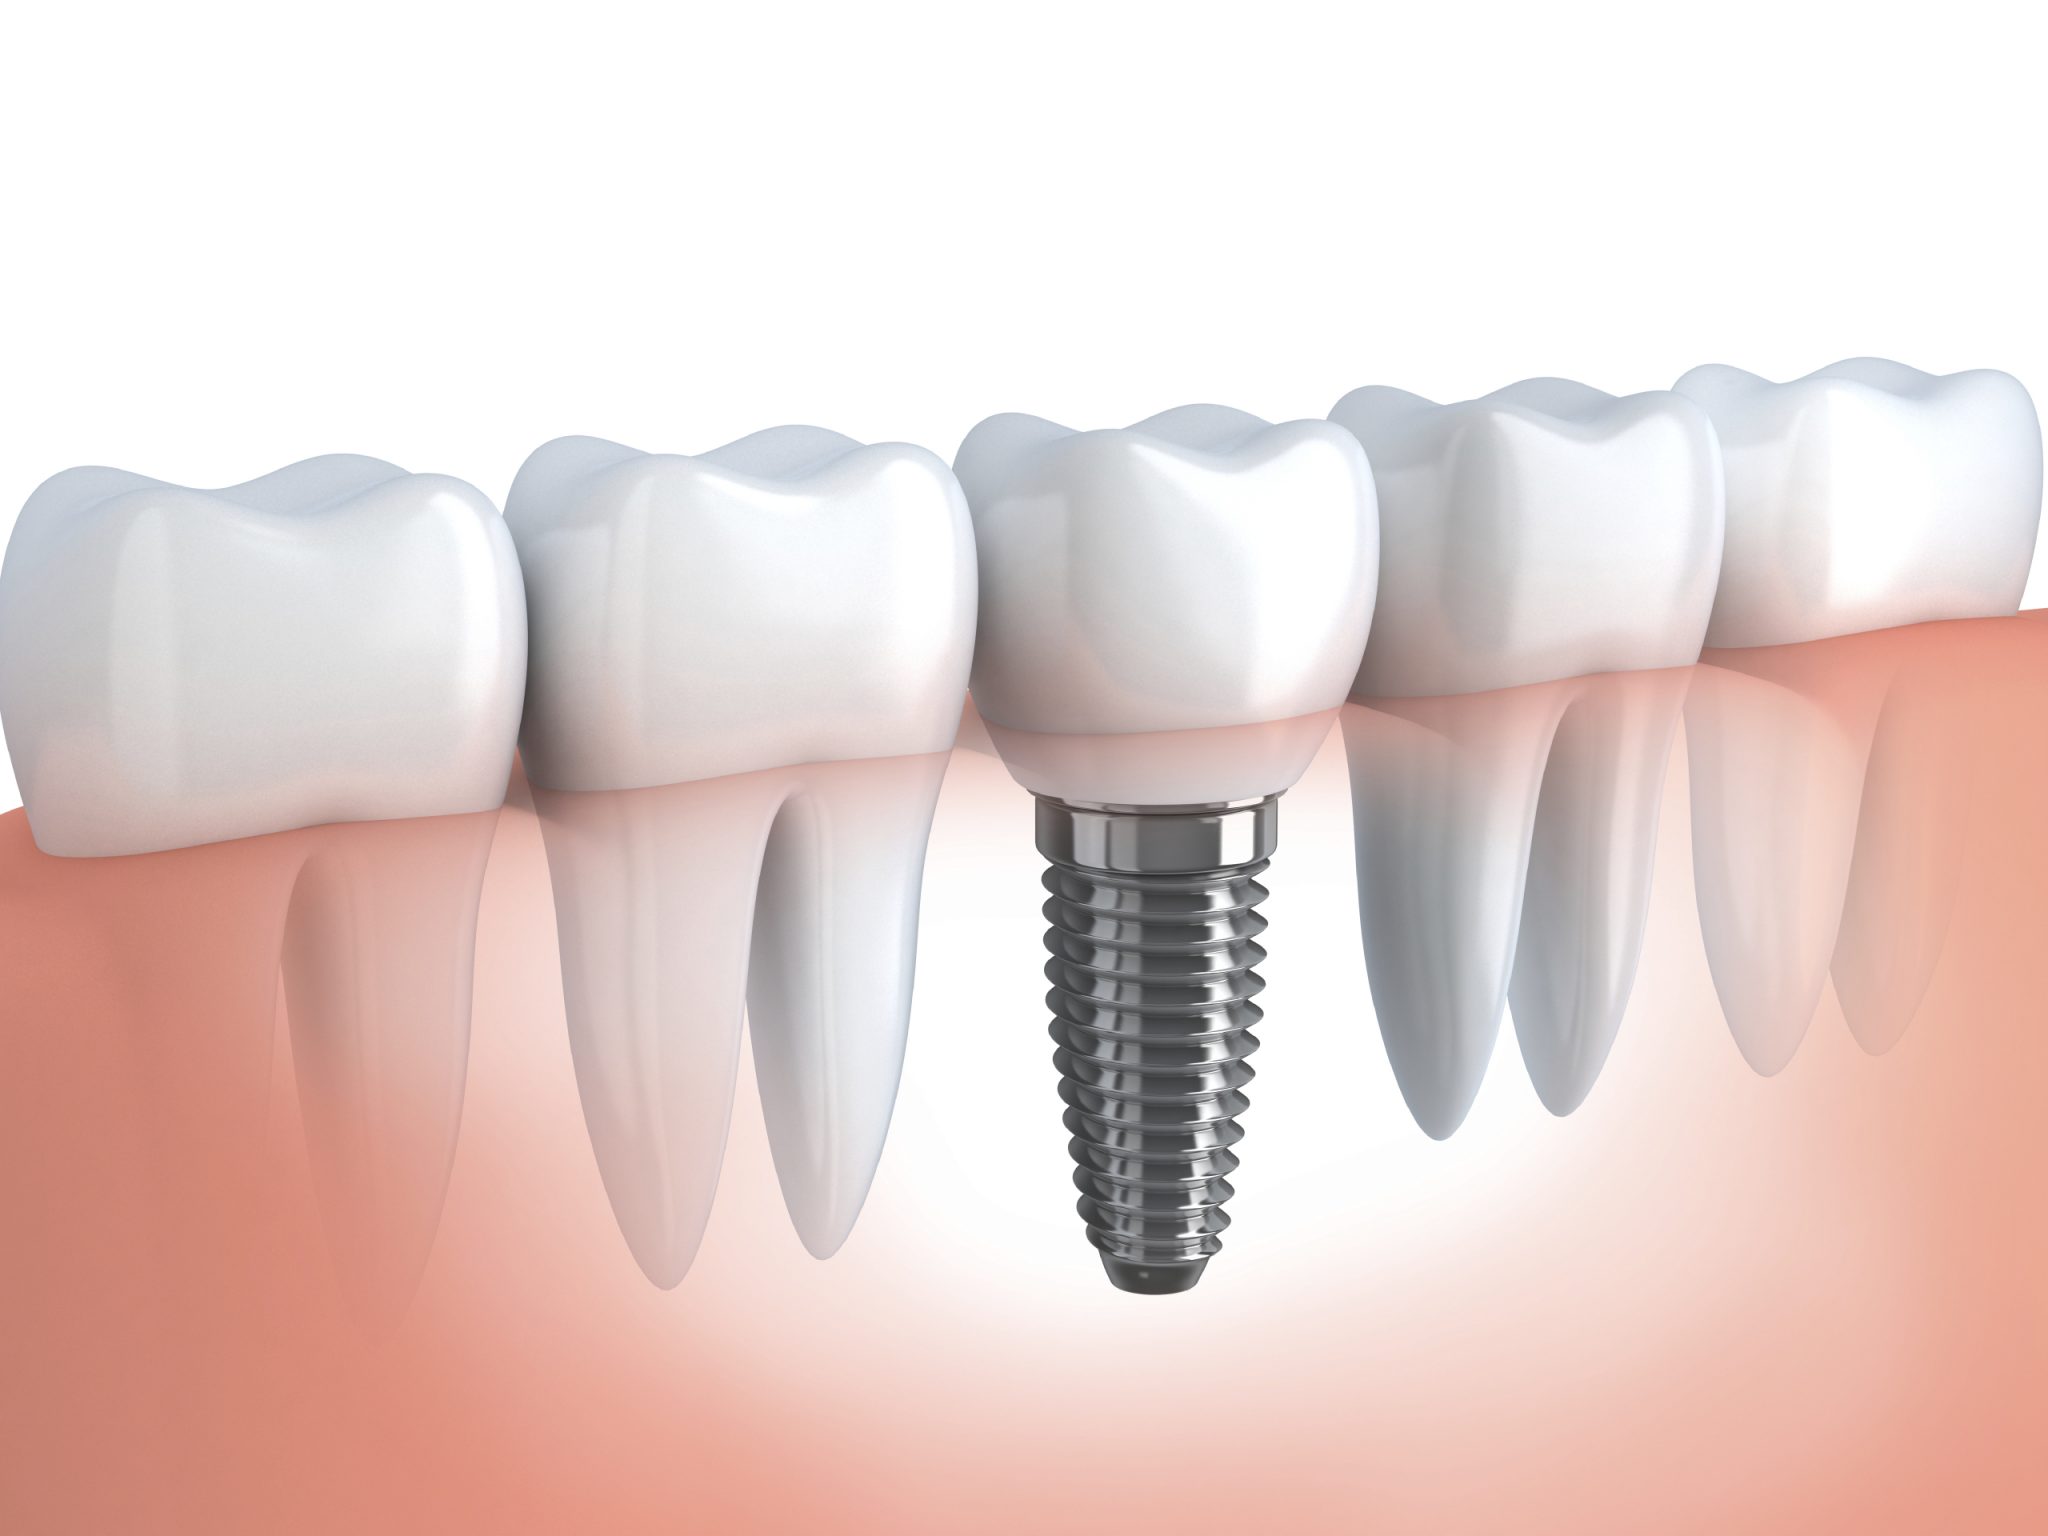 implante-dental-1